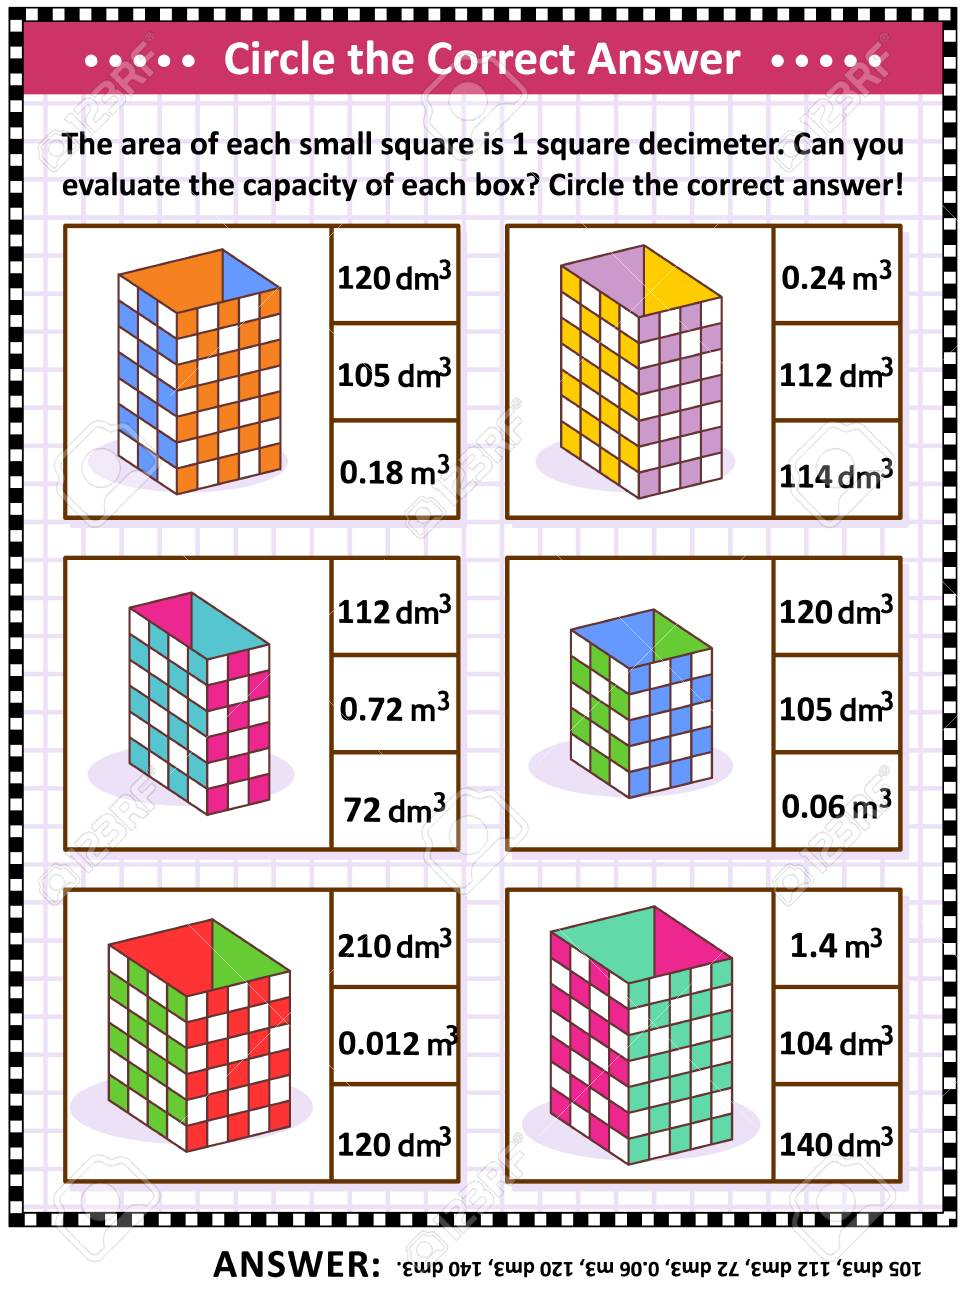 Math Skills And Iq Training Visual Puzzle Or Worksheet. Evaluate - Worksheet Visual Puzzle